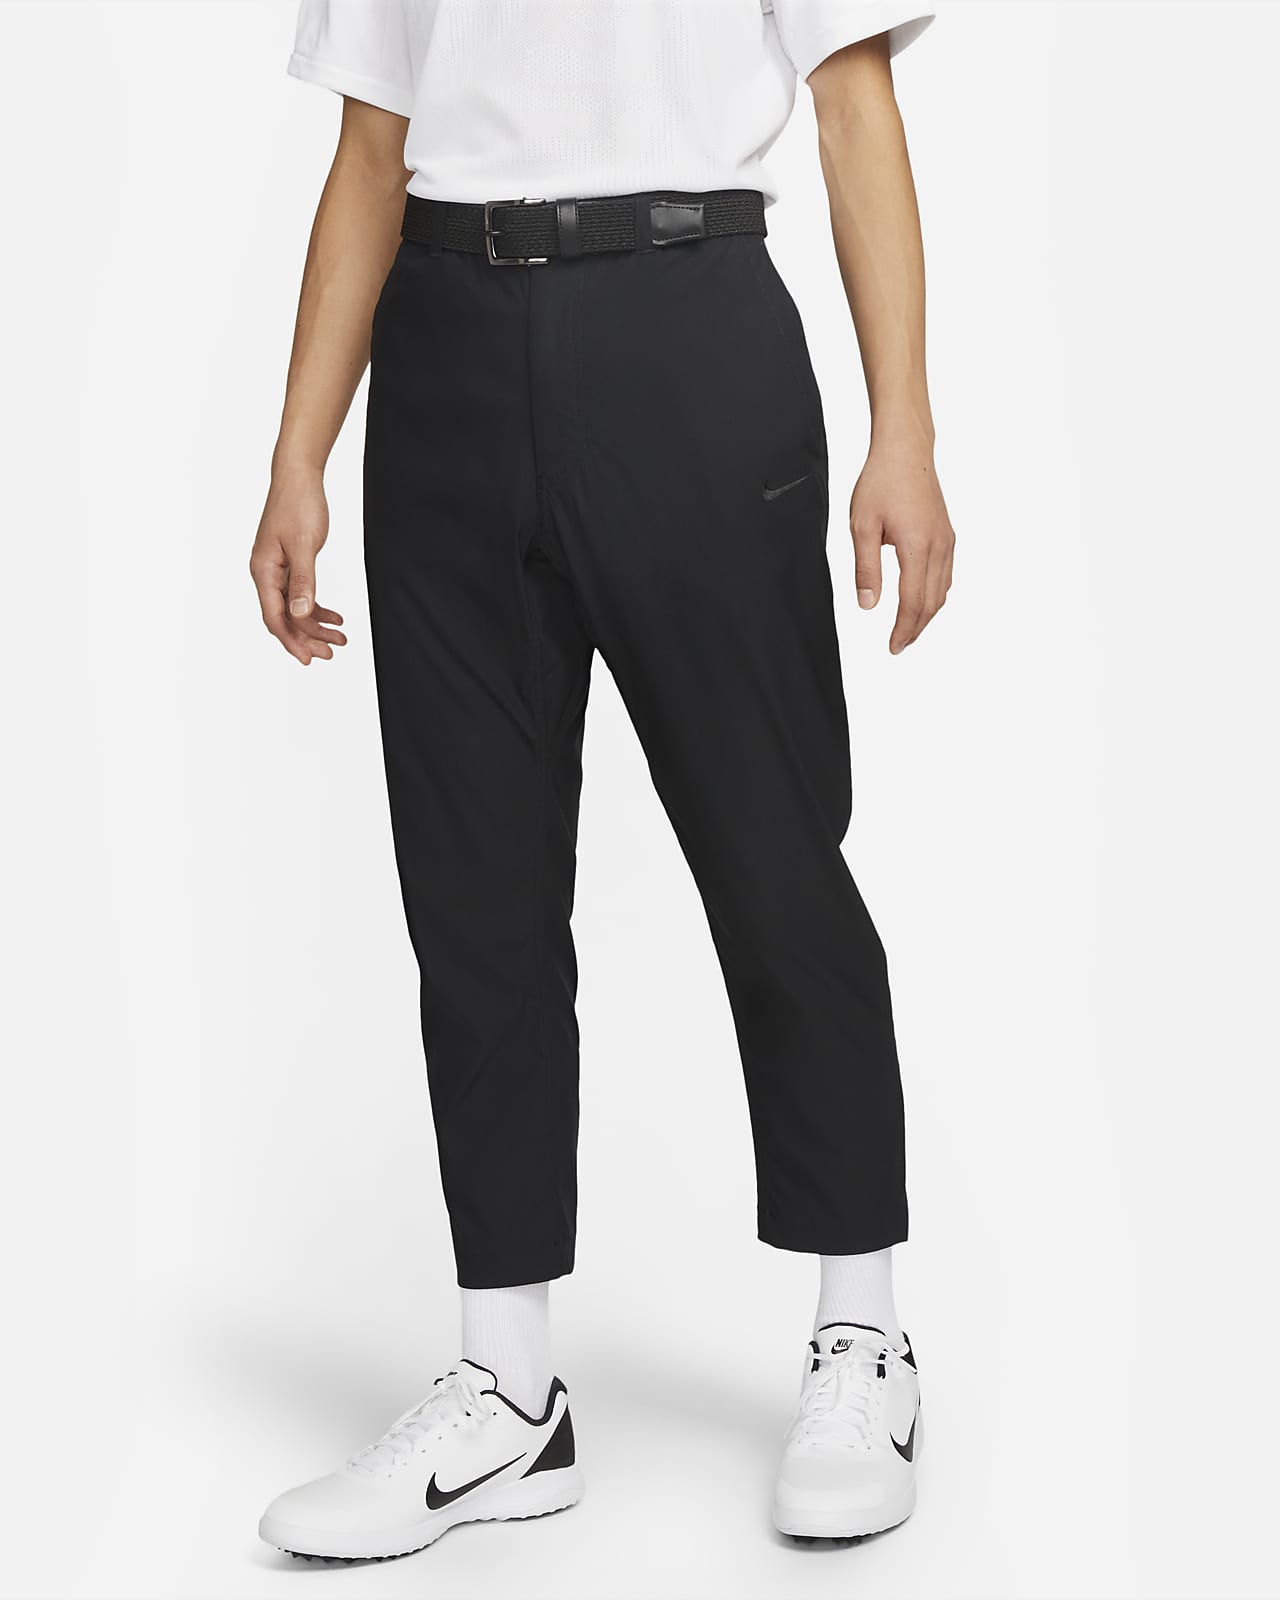 Nike Dri-FIT Men's Golf Trousers